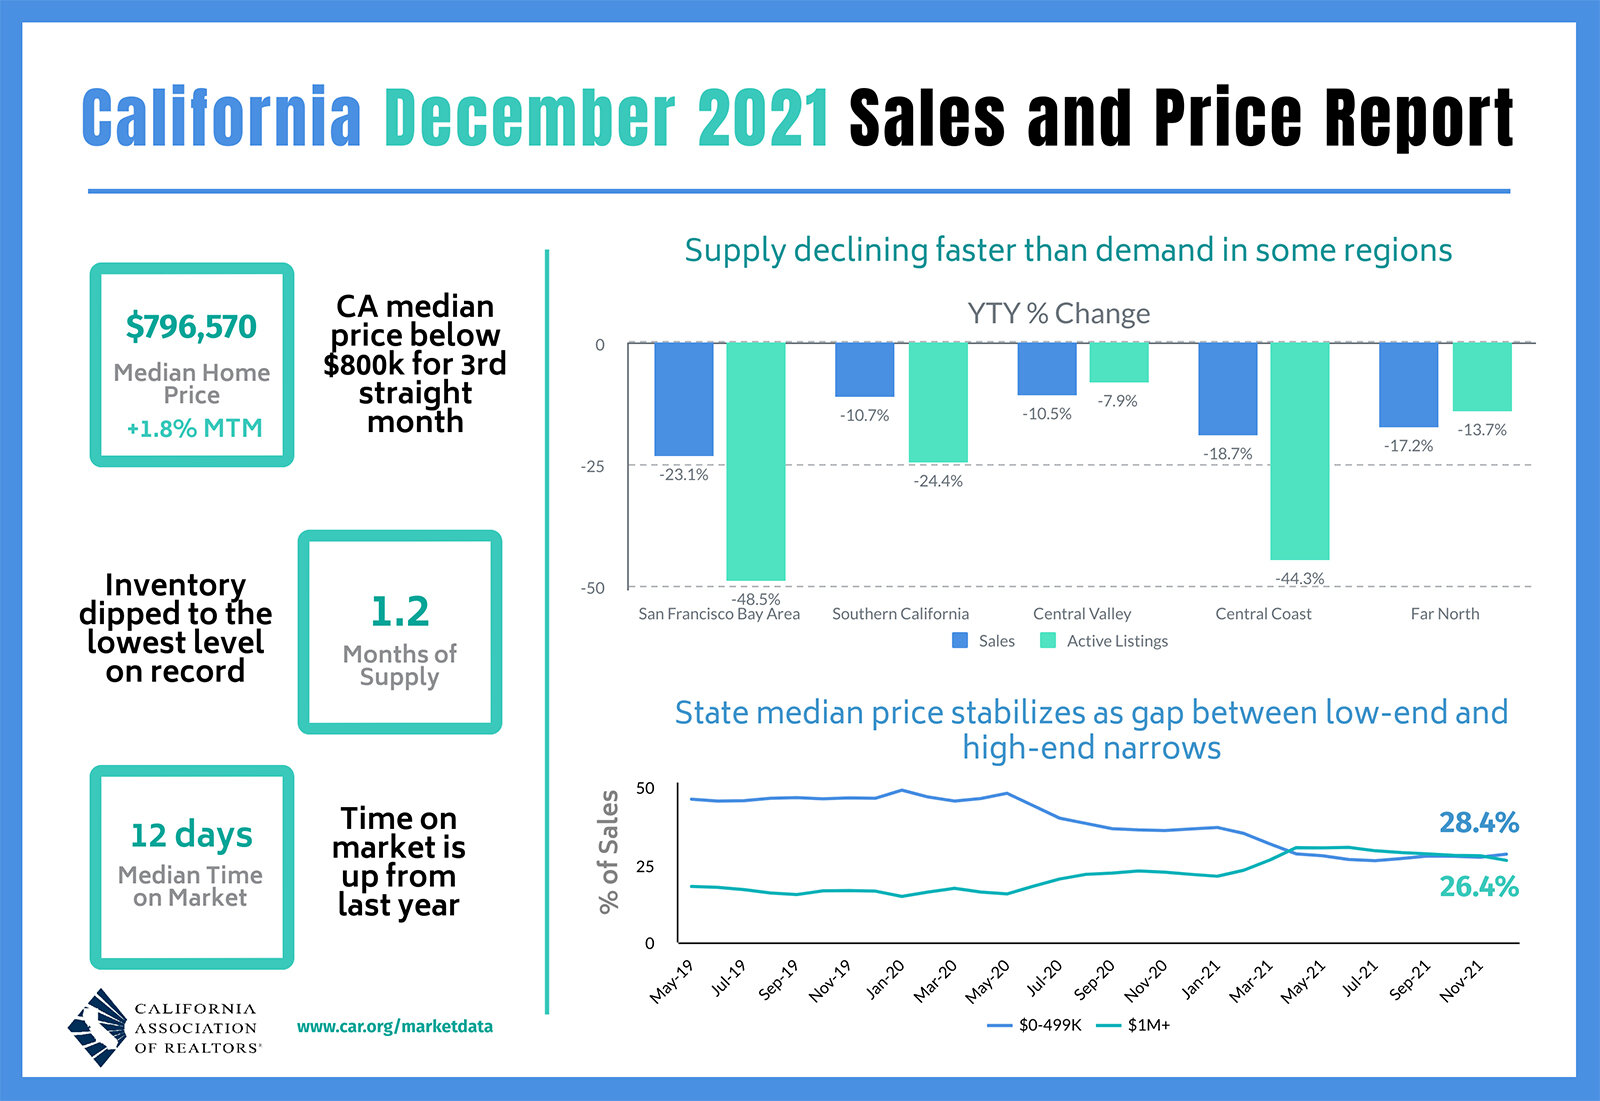 https://www.worldpropertyjournal.com/news-assets/California-December-2021-Sales-and-Price-Report.jpg